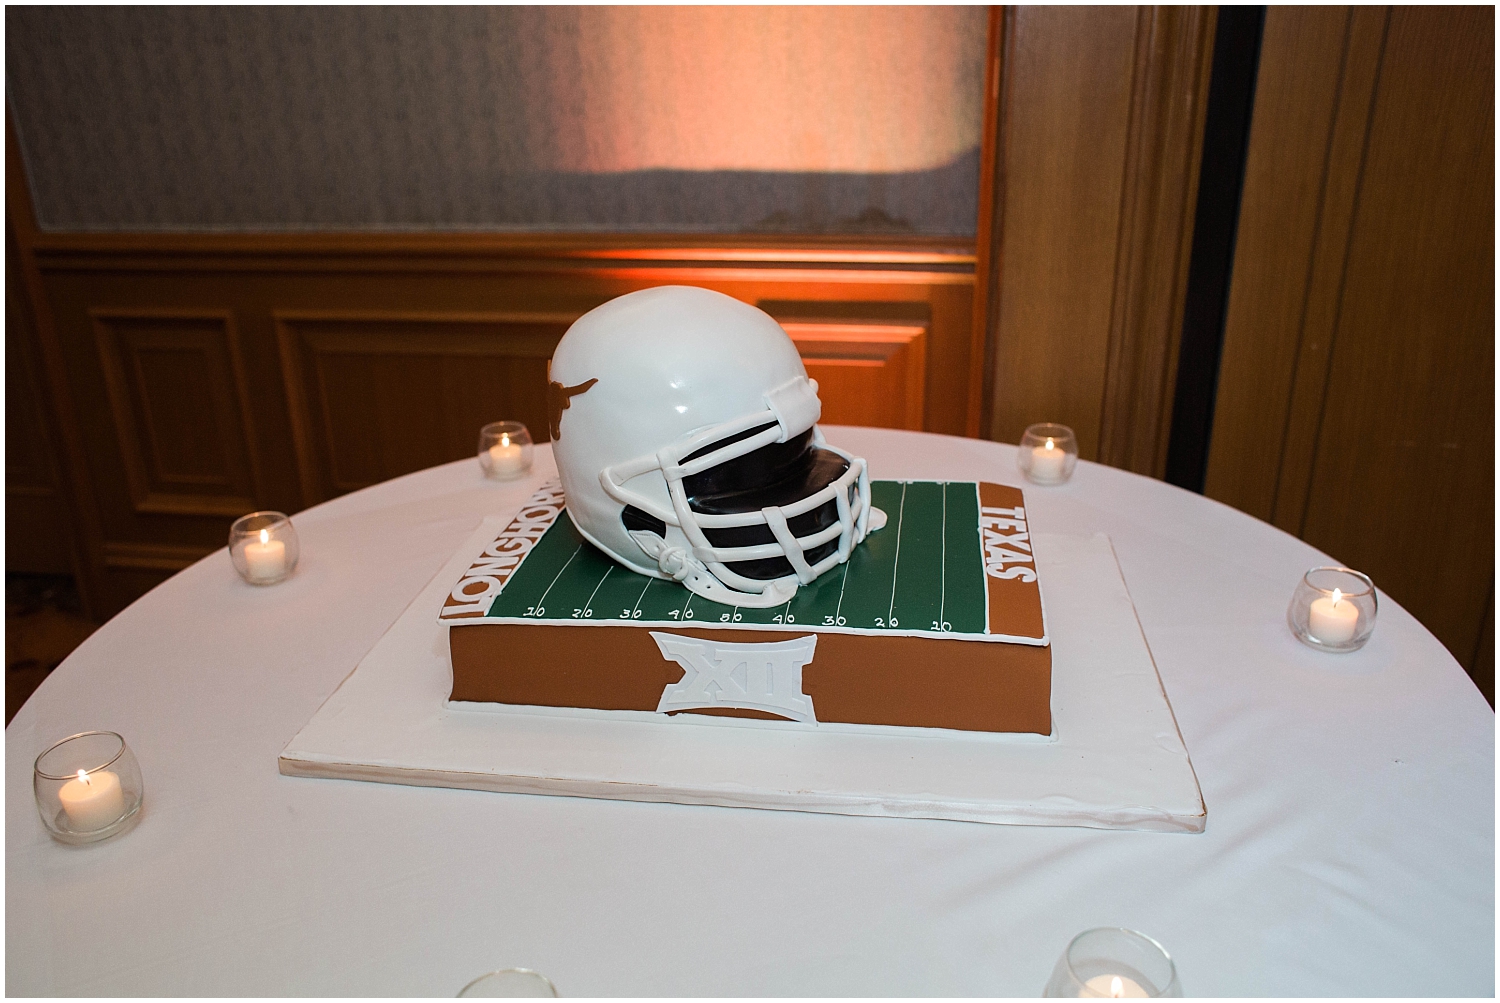  Football themed wedding cake TX 